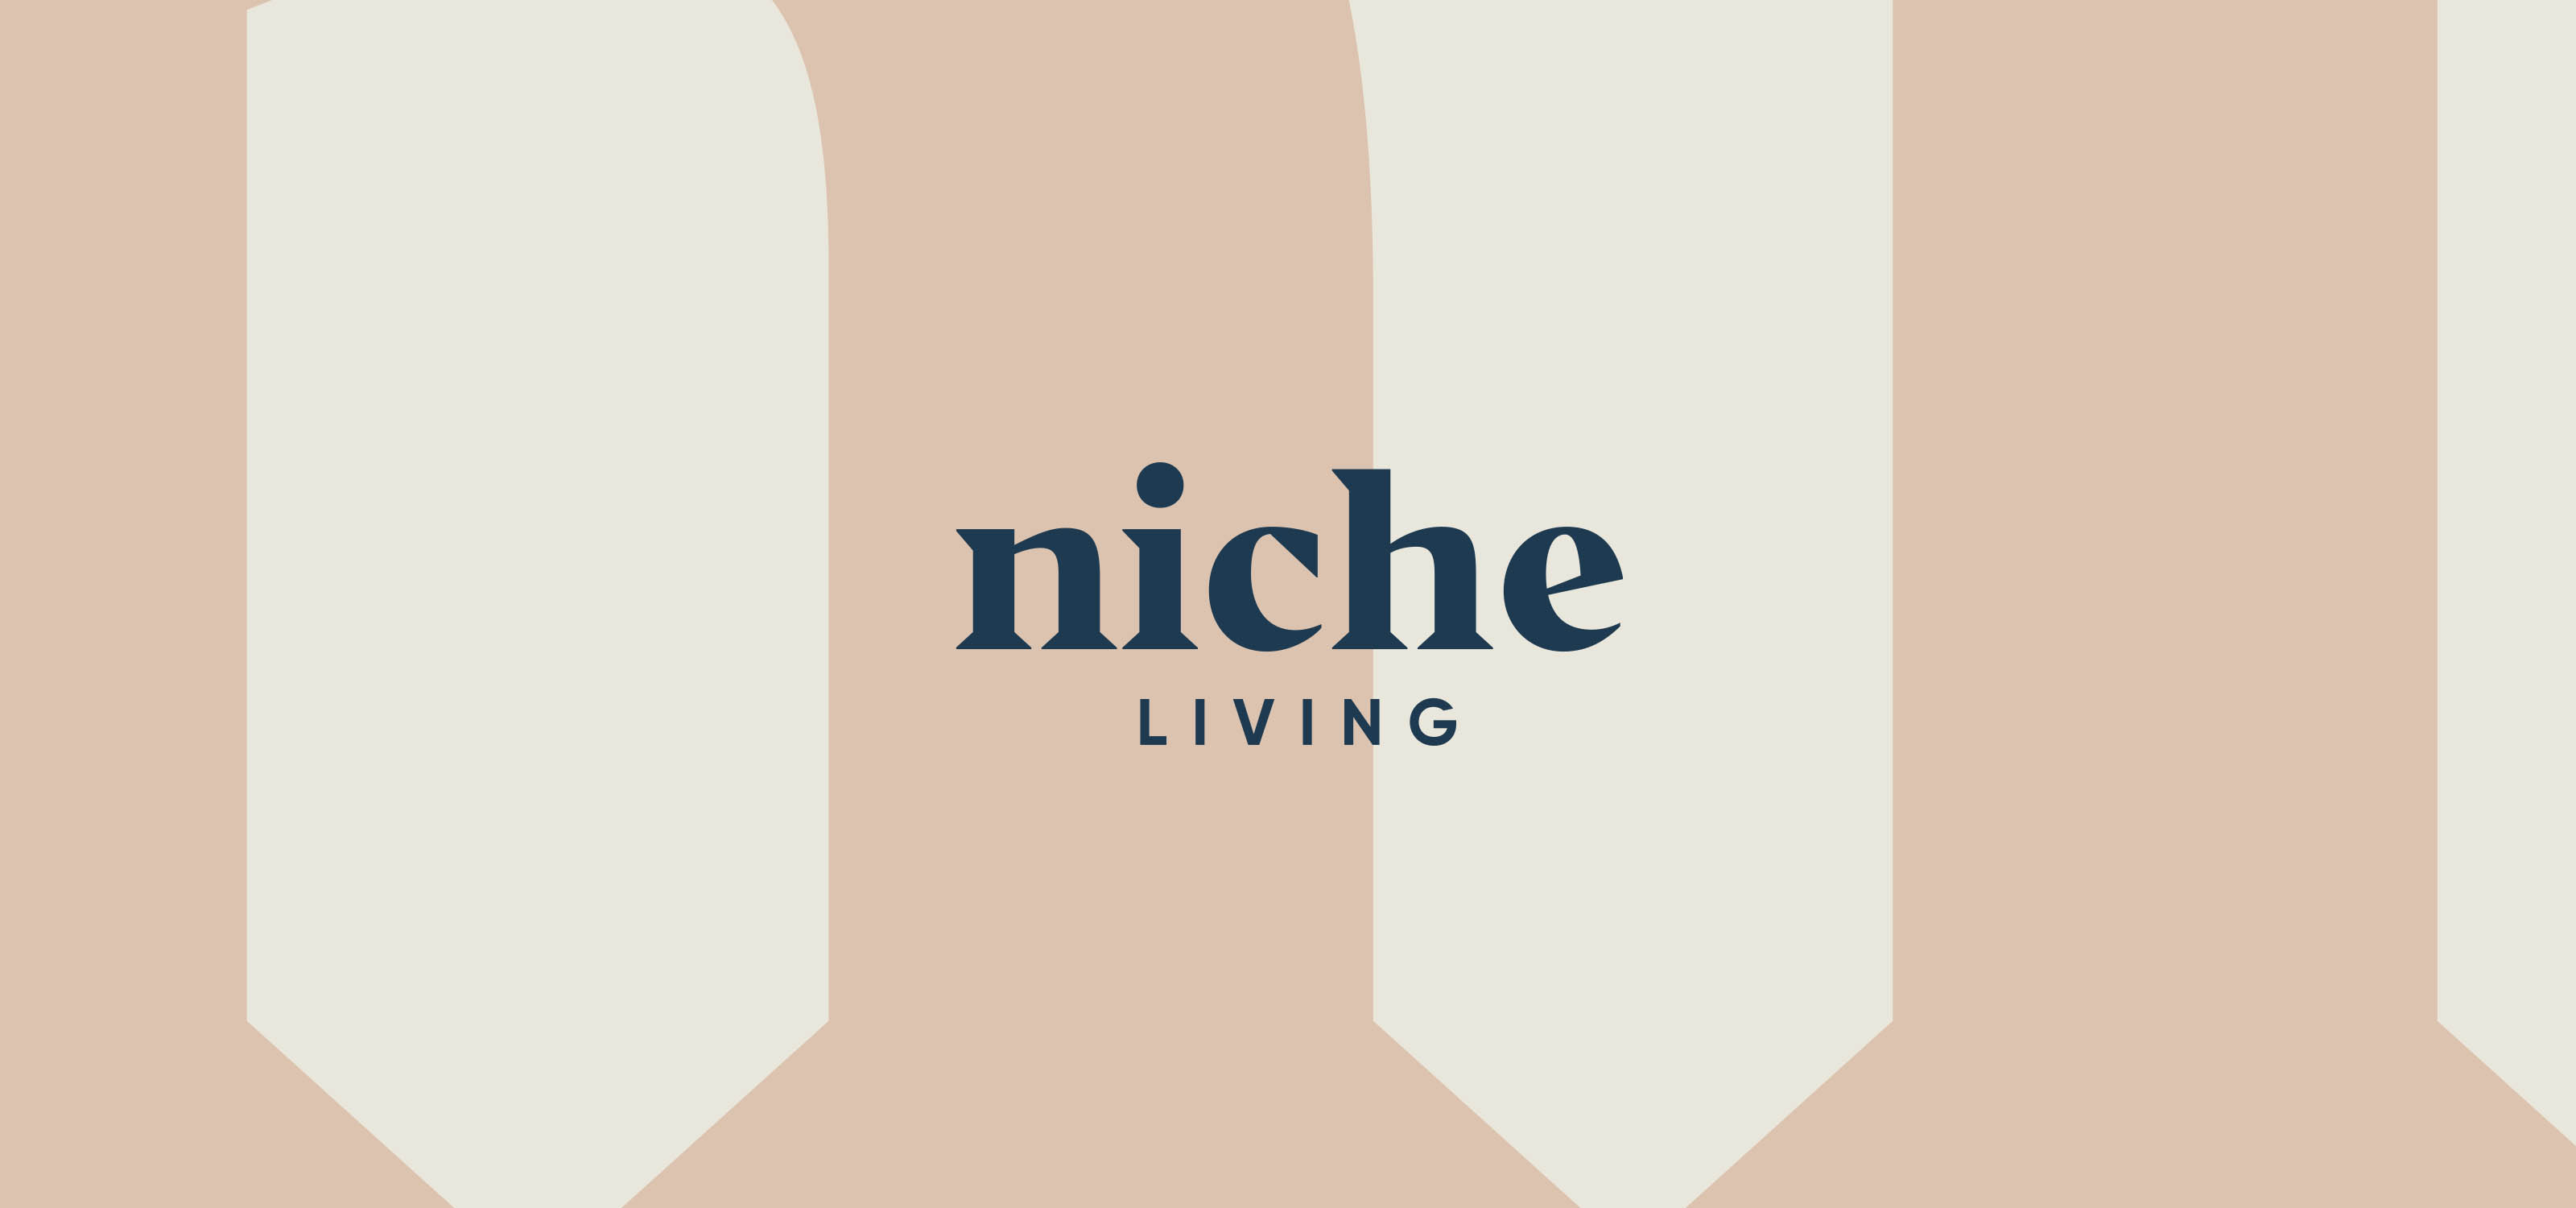 Niche Living 1